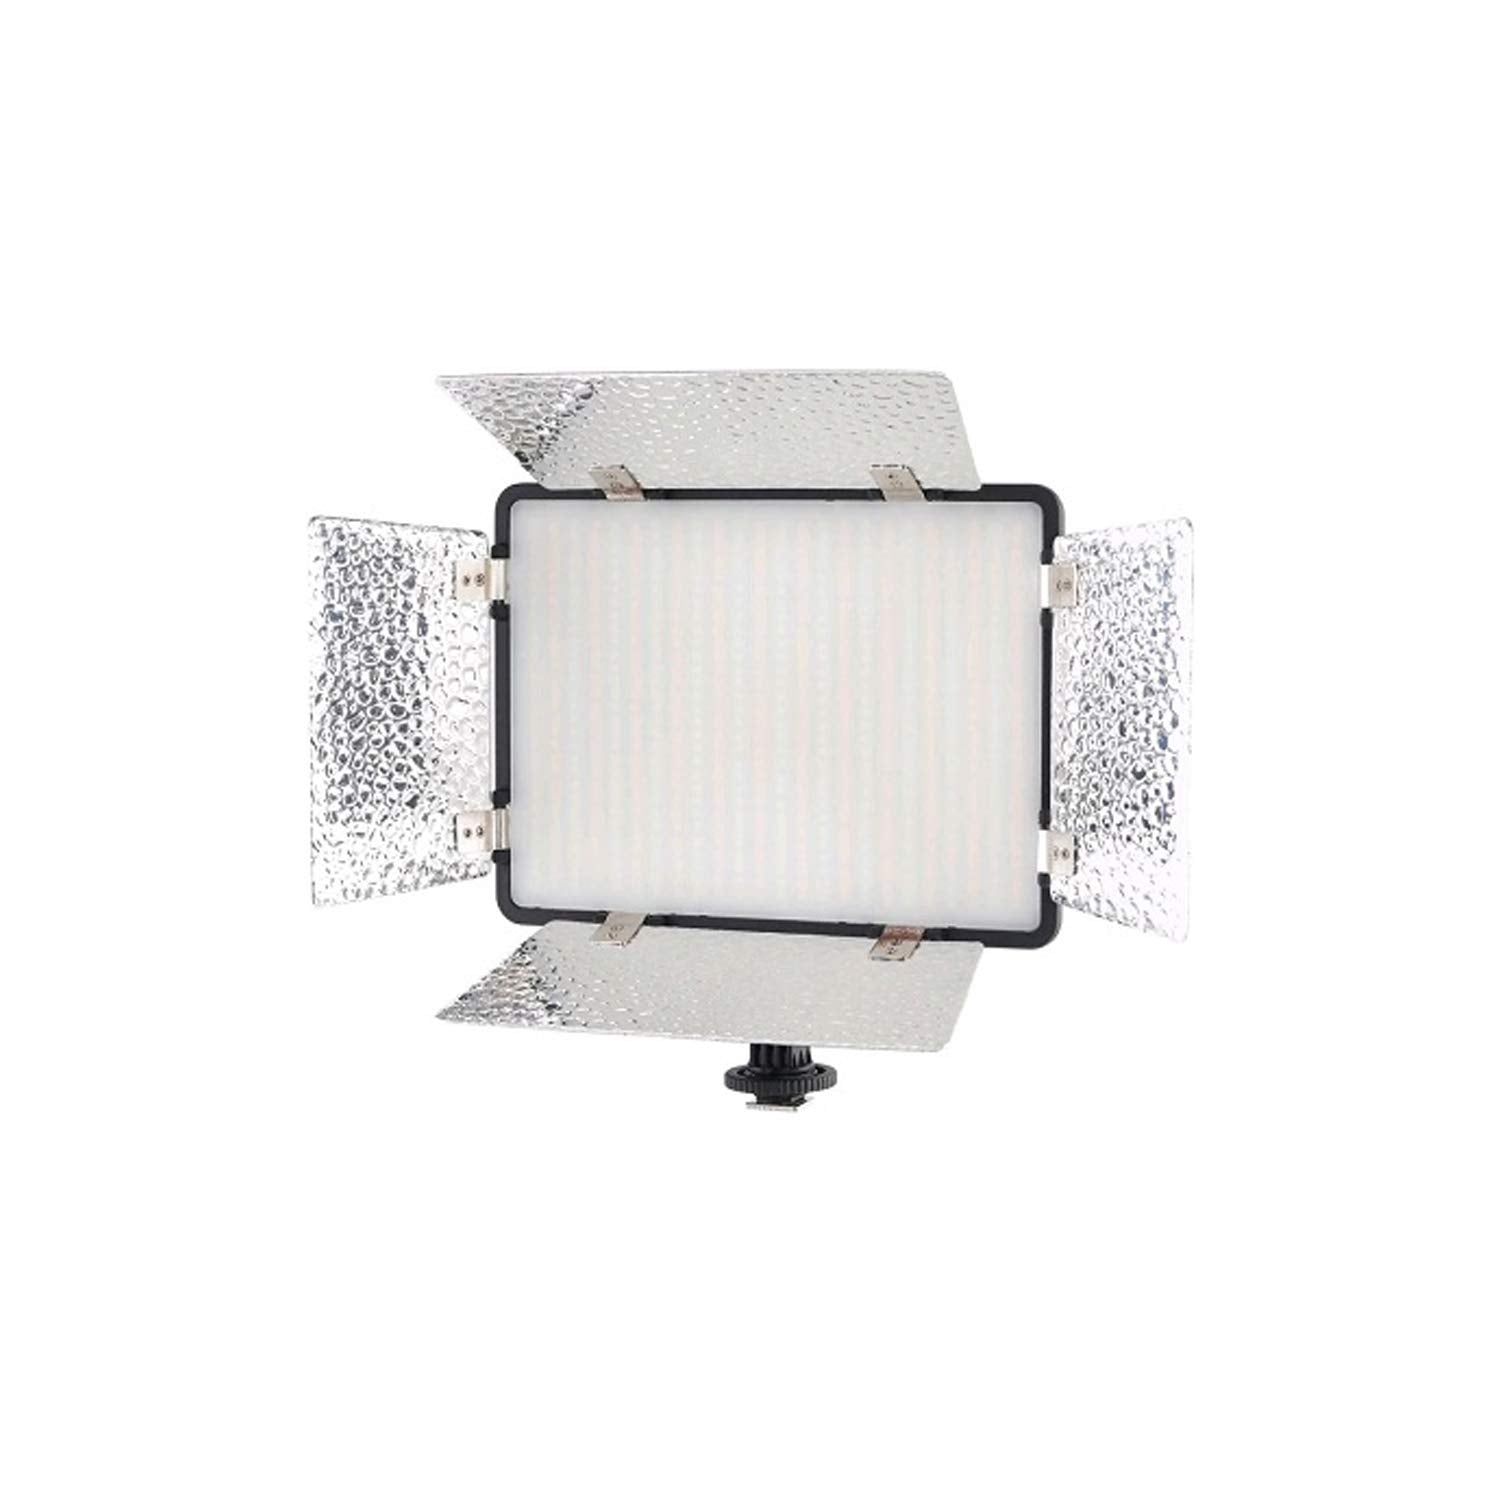 Simpex 320 Professional LED Video Light Dual Colour White